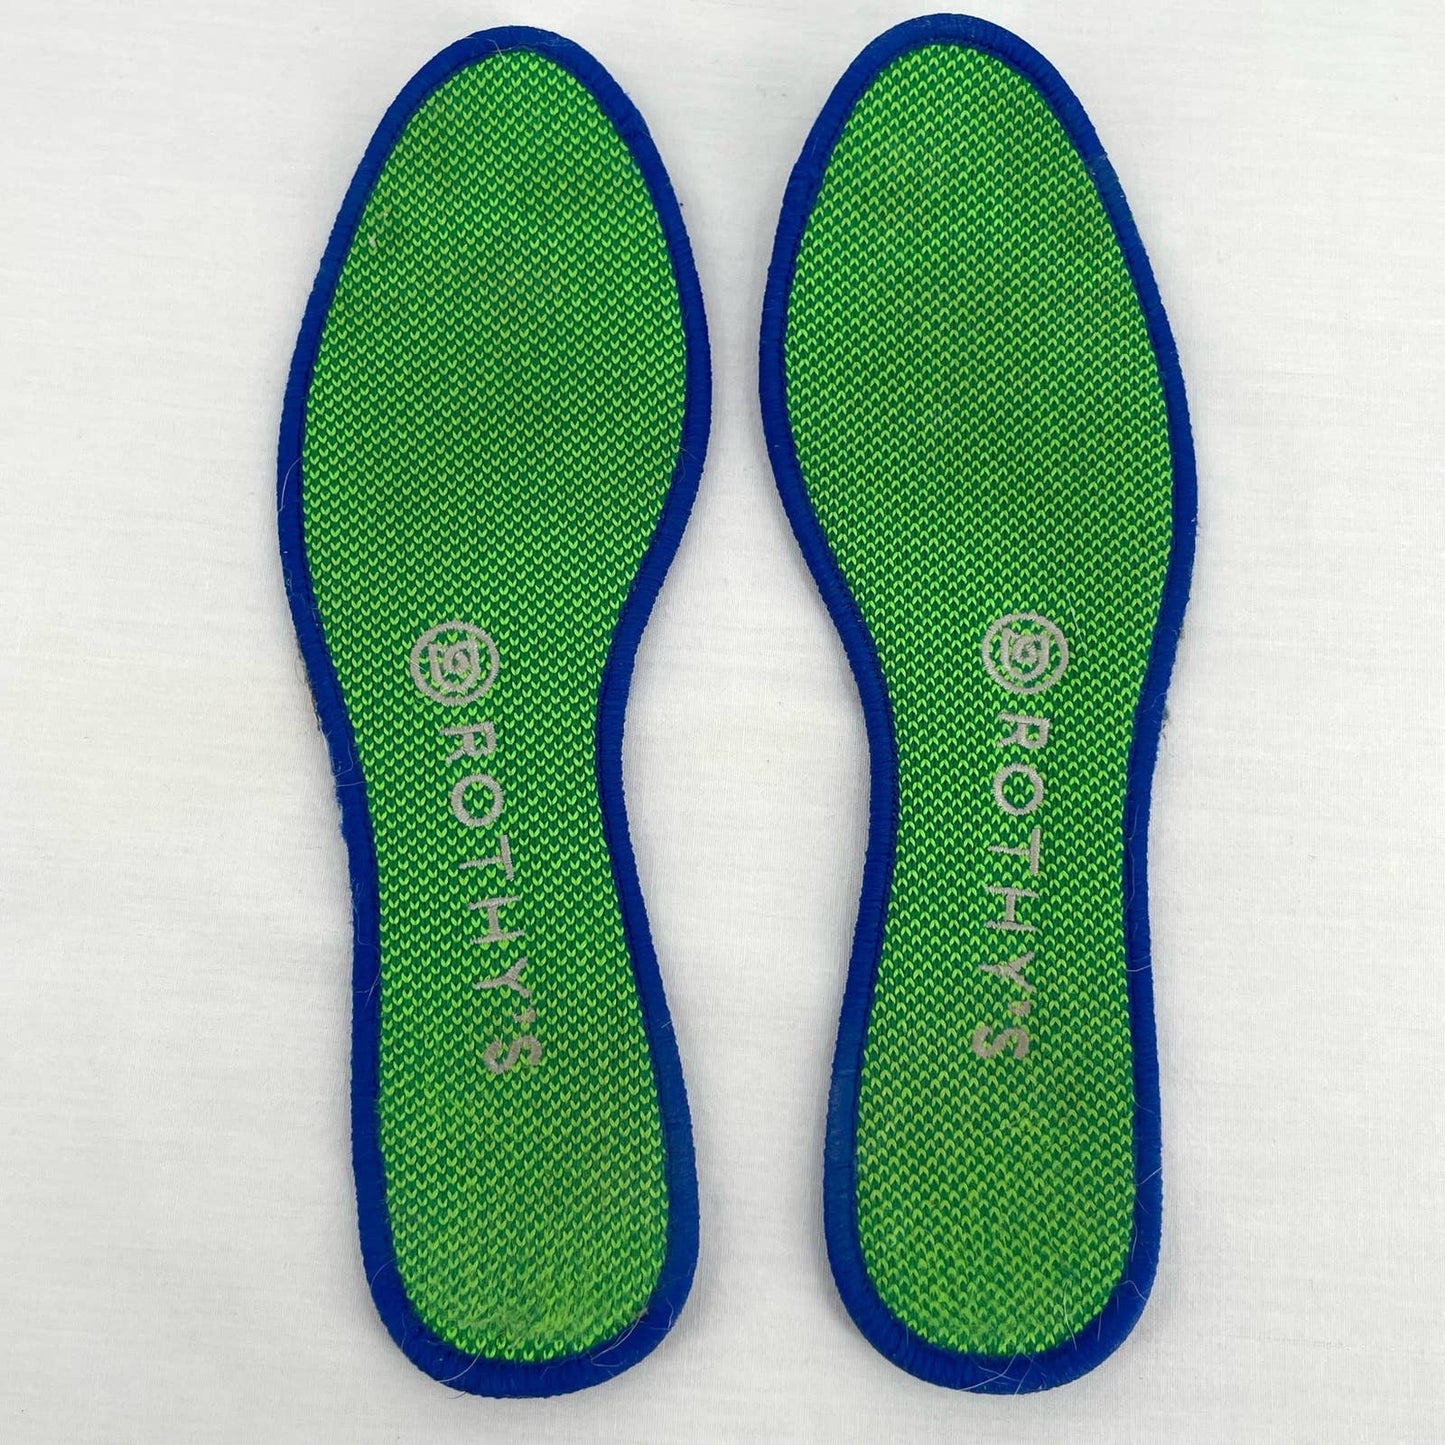 Rothy’s The Flat Jellybean Green Jelly Bean Reflex Blue Heel Stripe Shoes Size 7